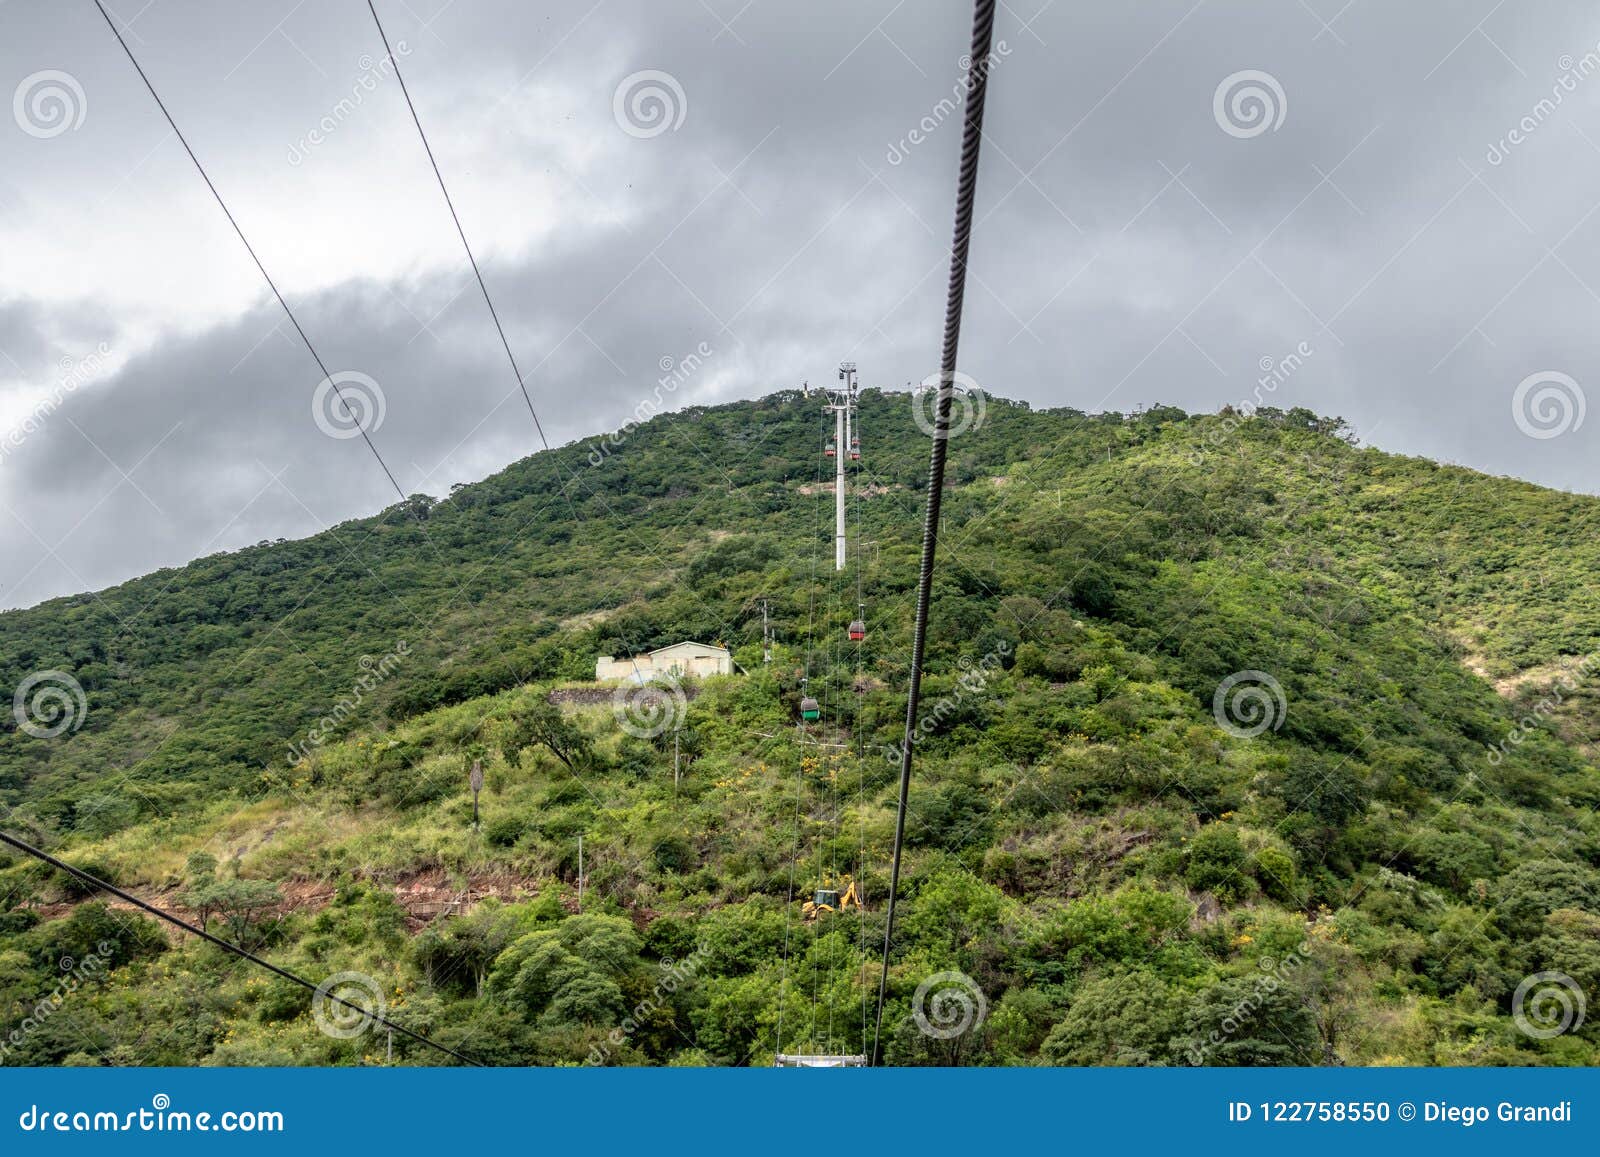 cerro san bernardo hill cable car - salta, argentina